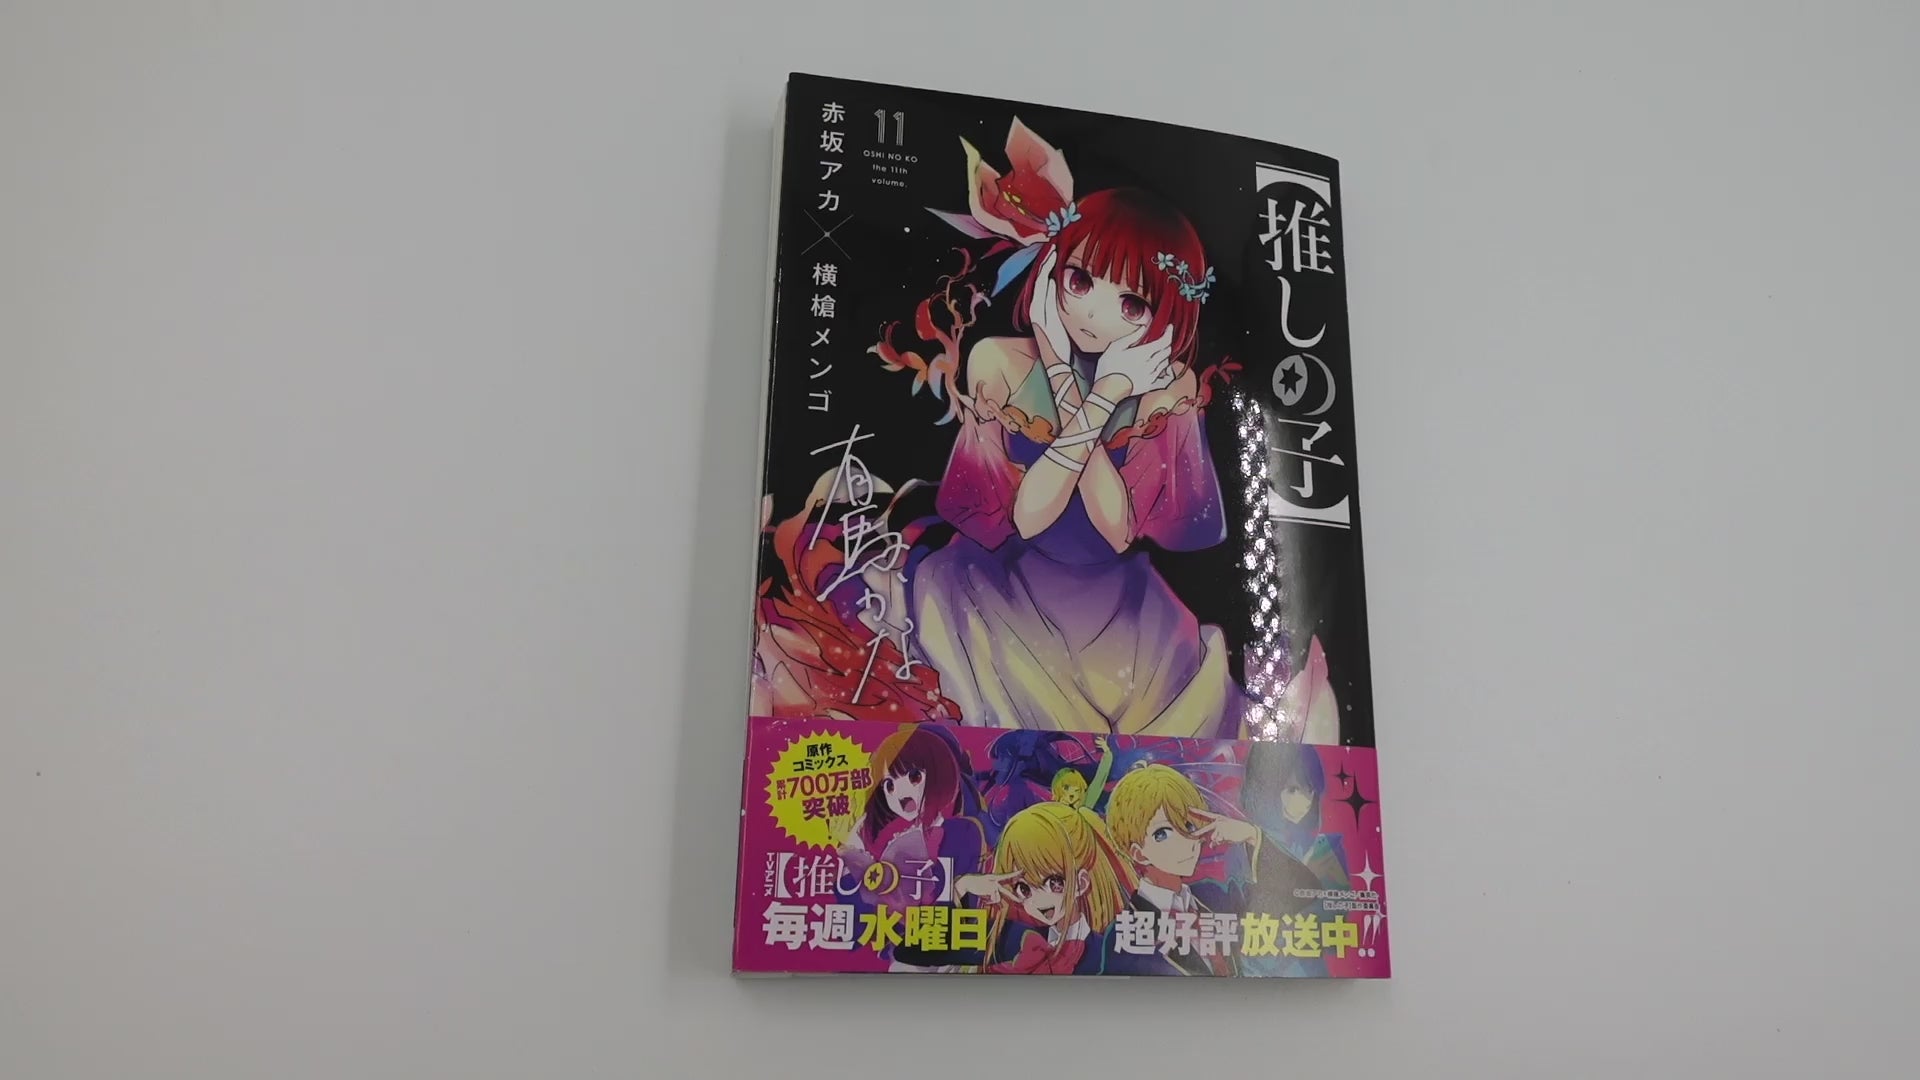 Oshi No Ko Vol.10 Japanese Version Anime Manga Comic